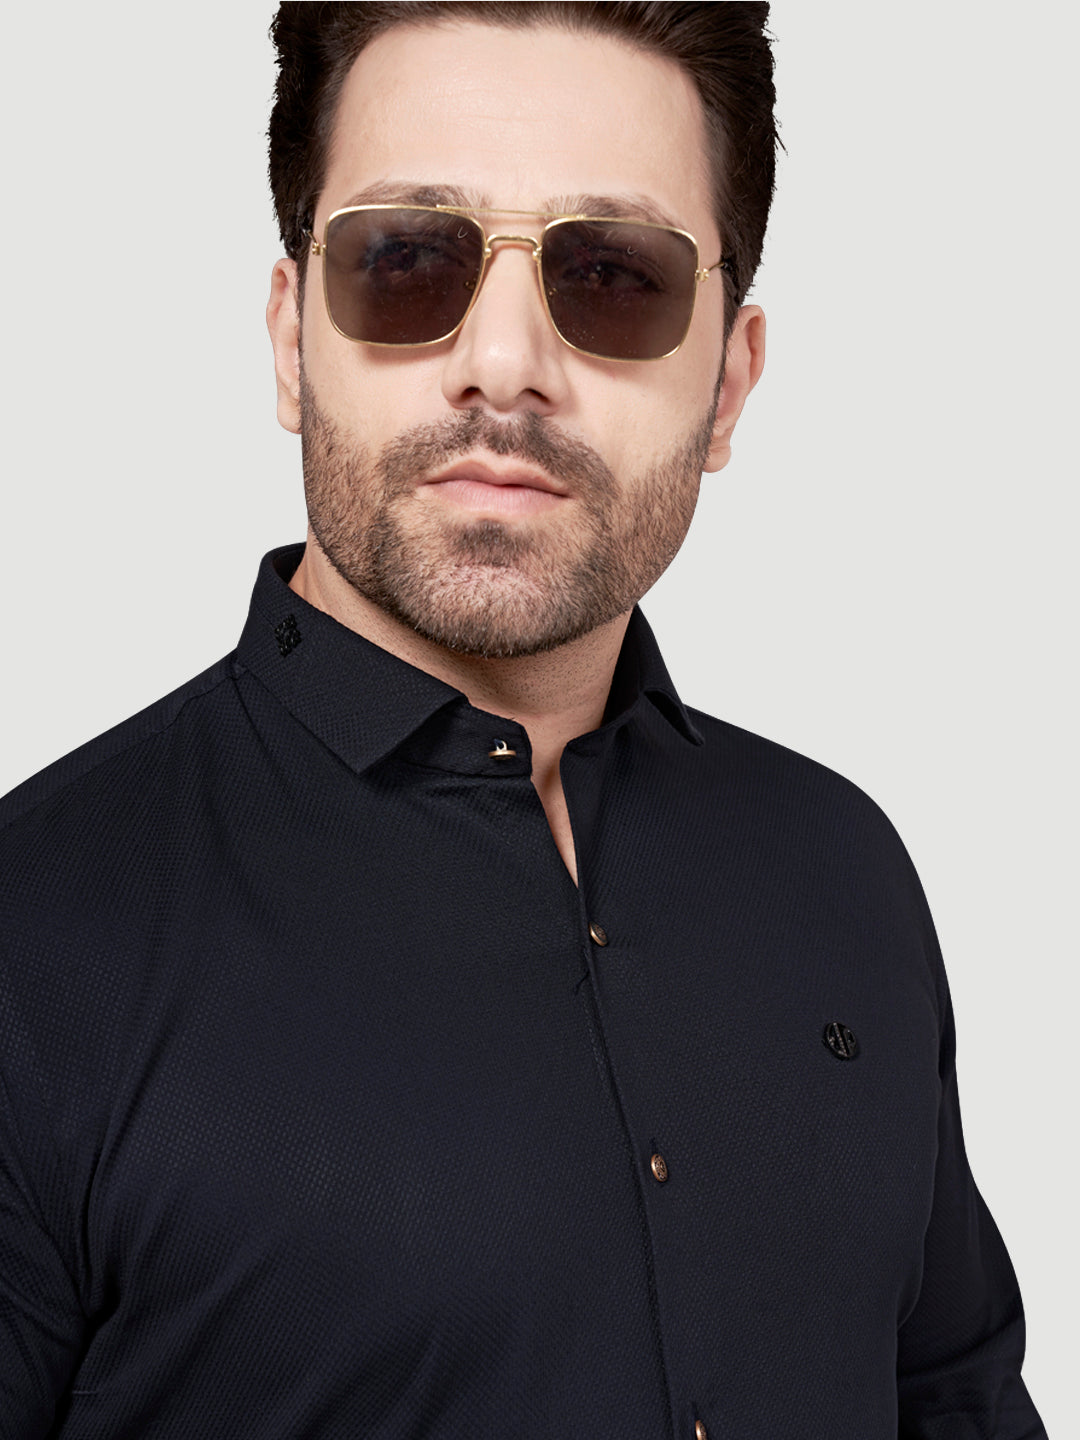 Black and White Men's Designer Shirt with Collar Accessory & Designer Broach Navy Blue